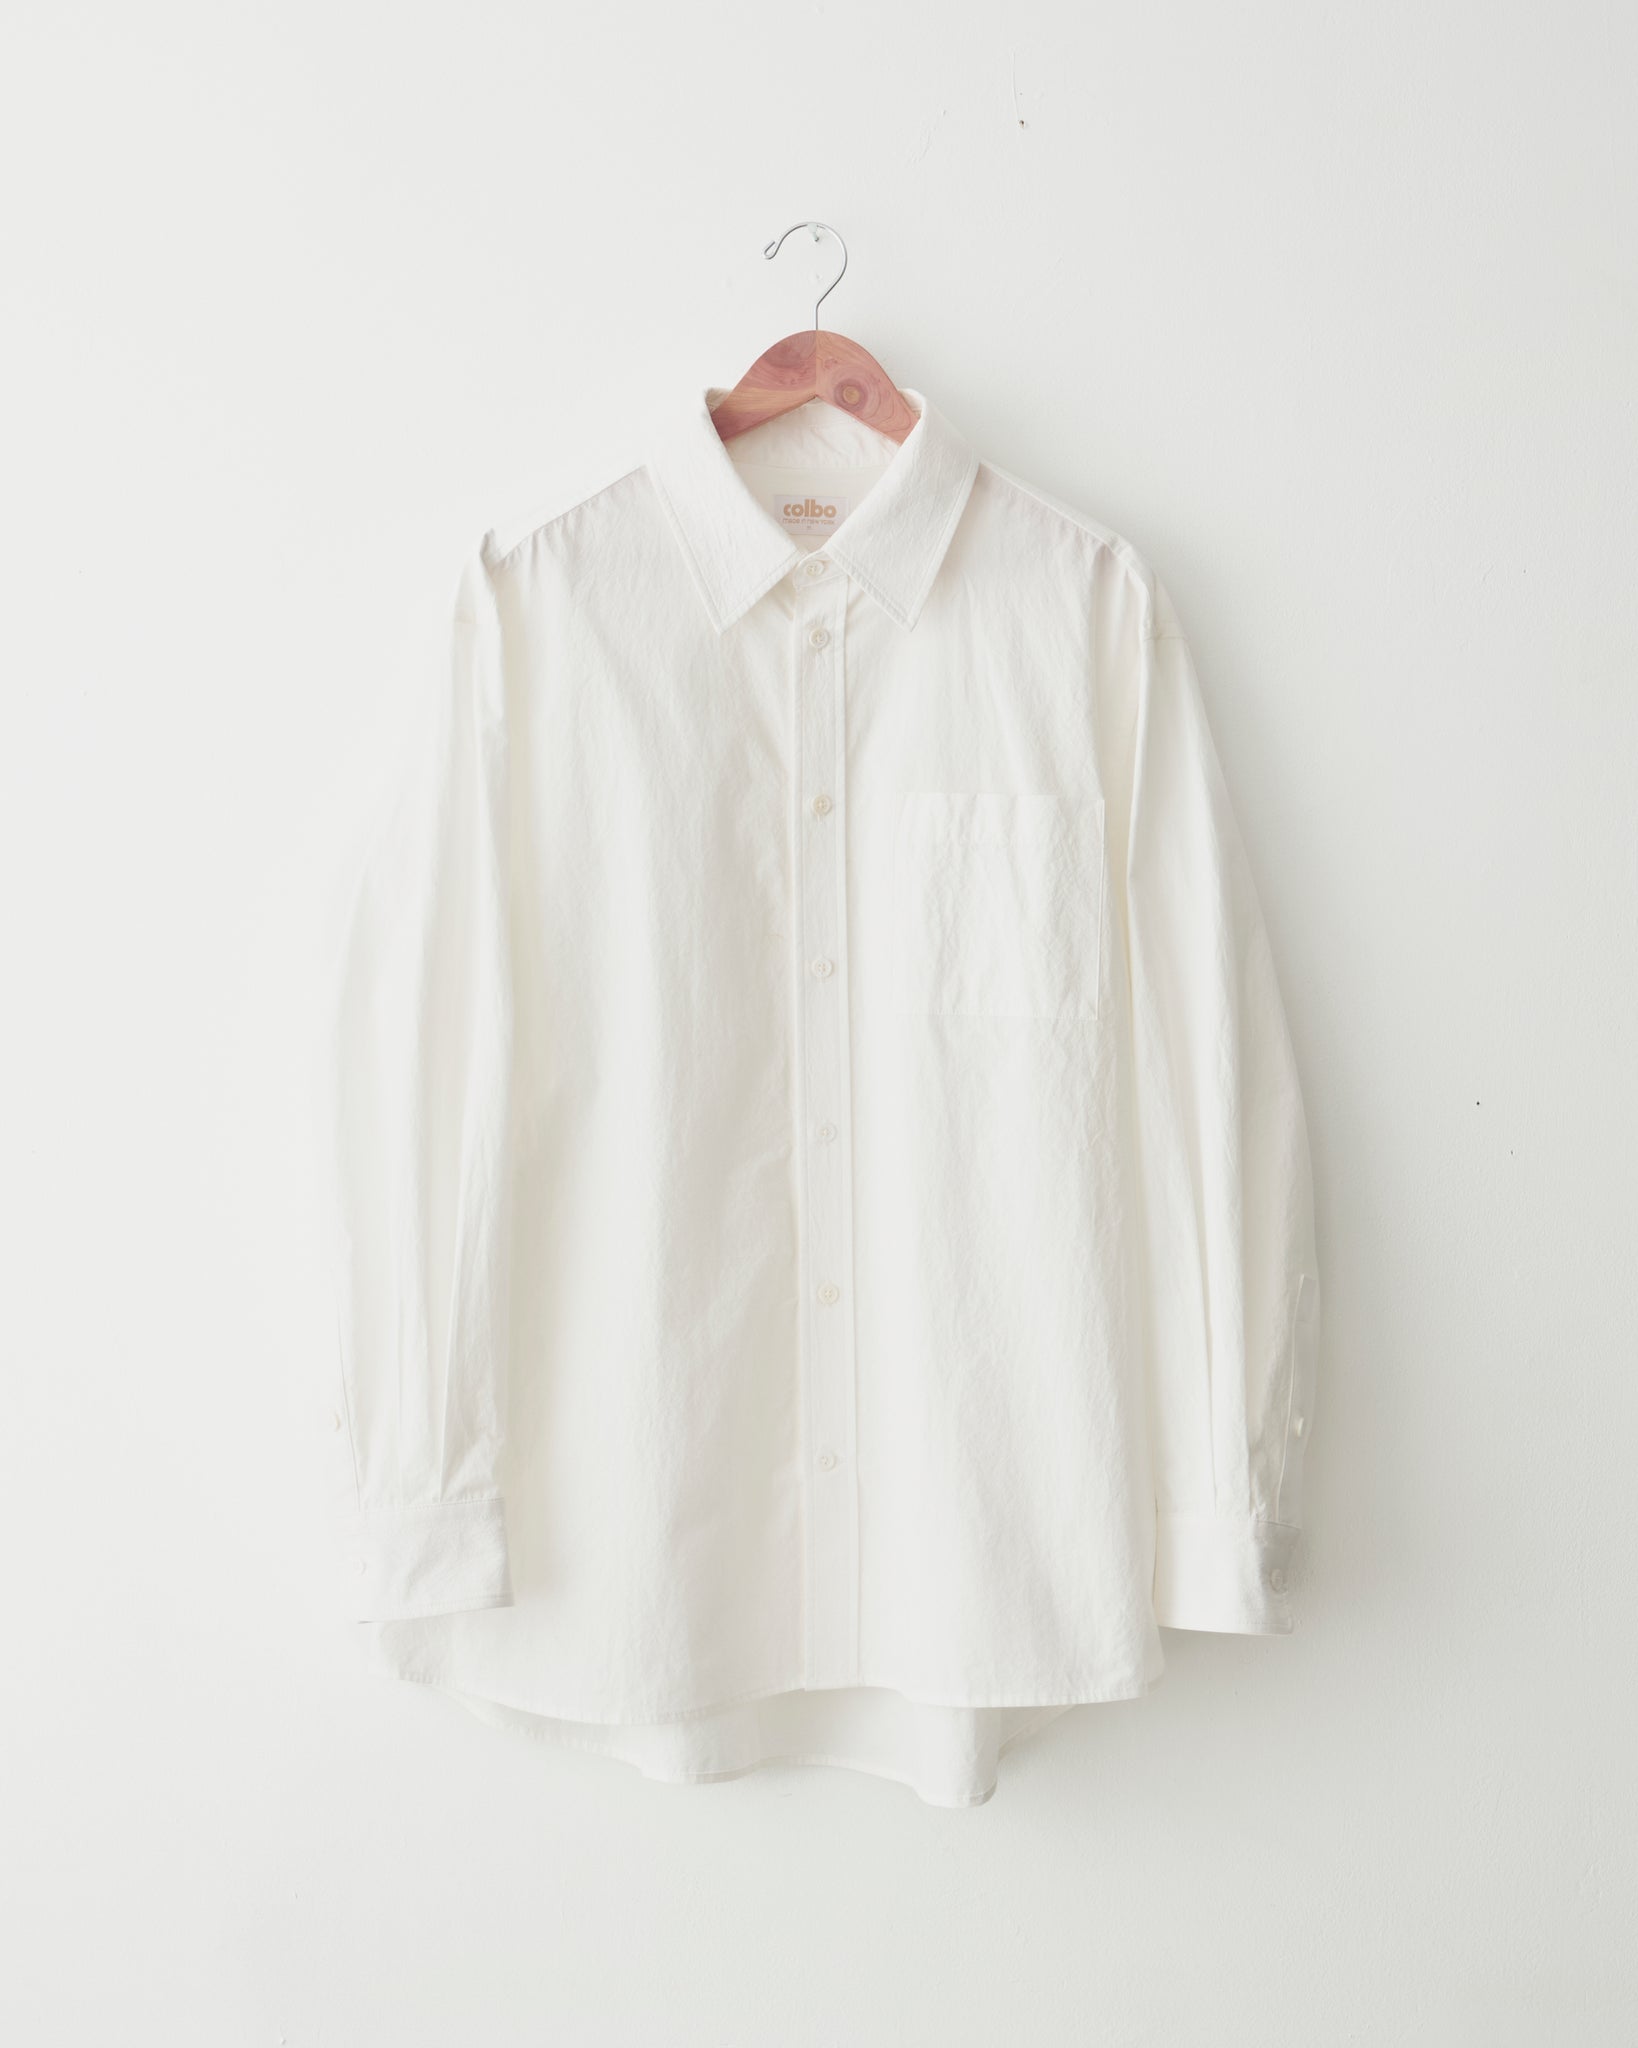 TK Shirt, White